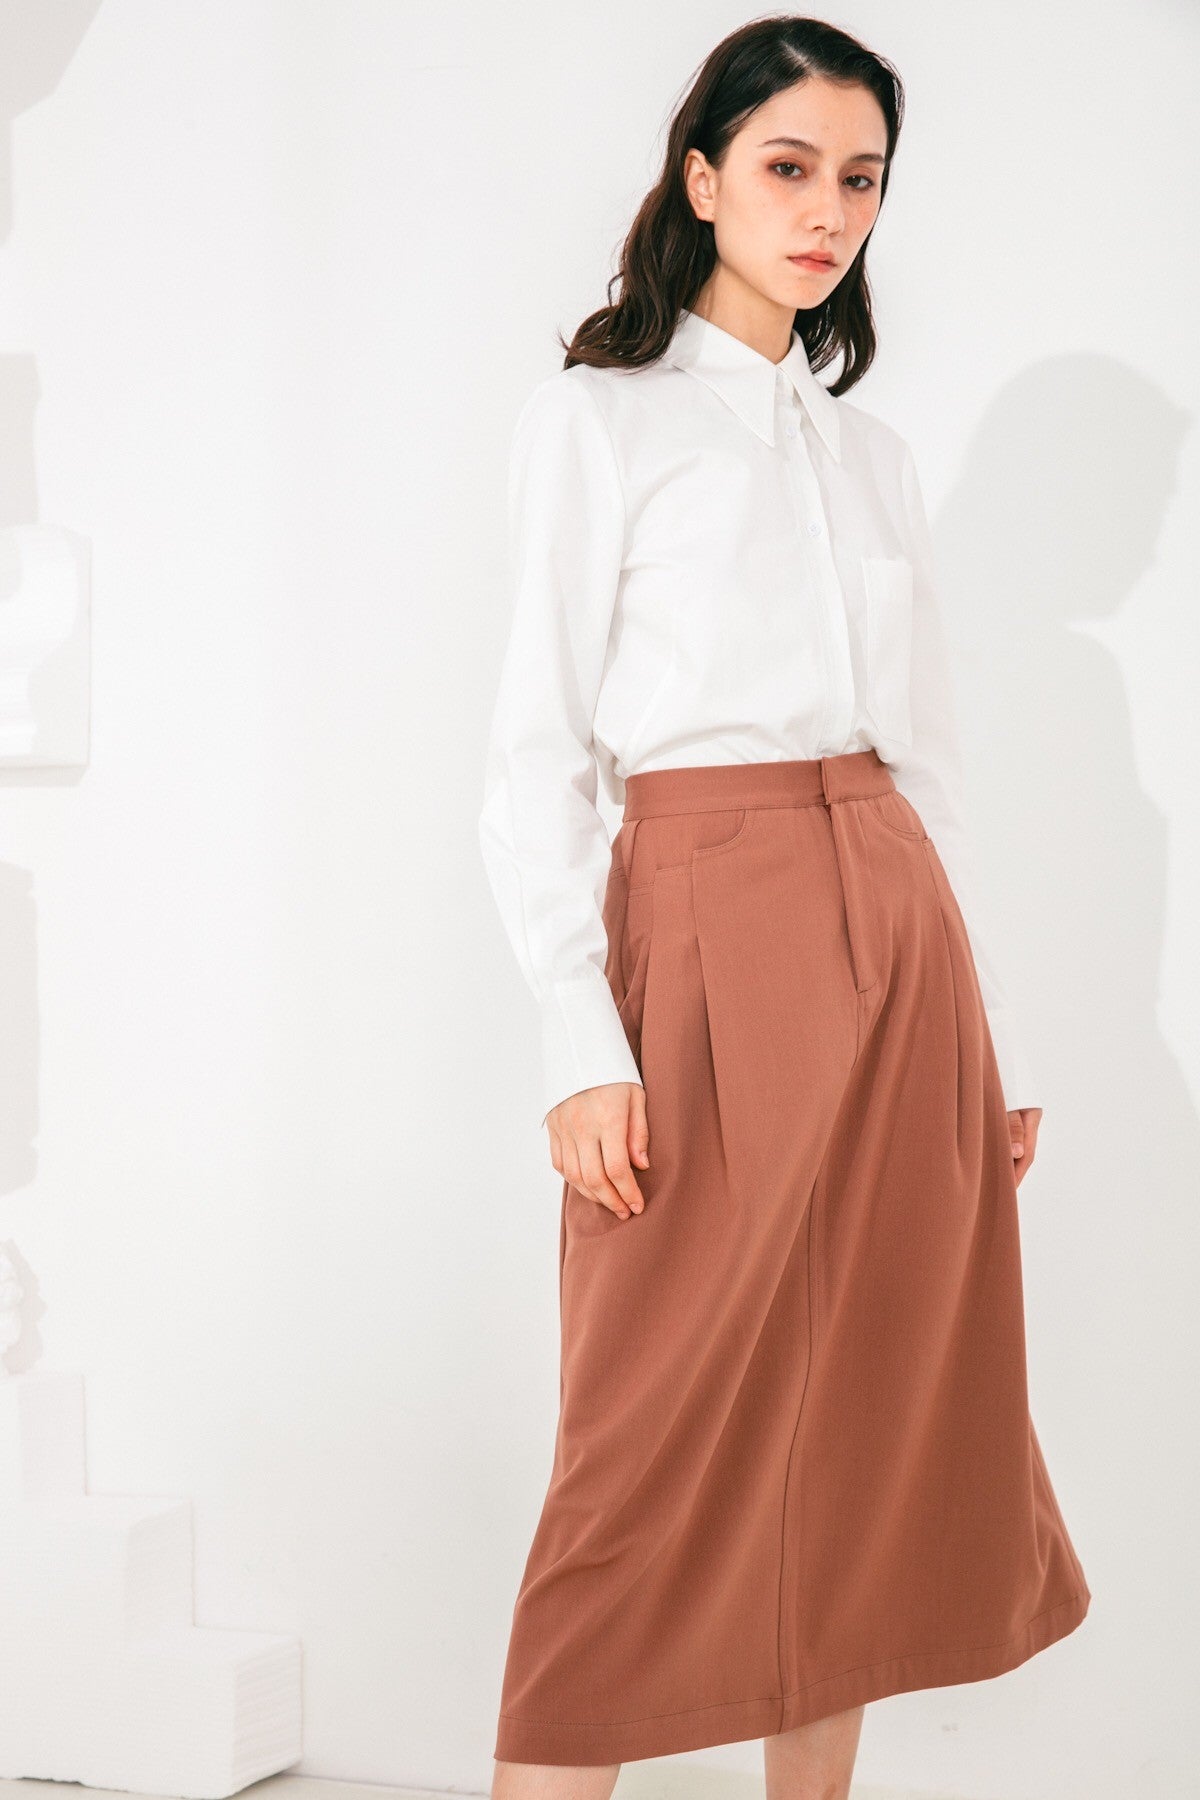 SKYE San Francisco SF shop ethical sustainable modern minimalist elegant quality women clothing fashion brand Aurelie Midi Skirt Light Brown